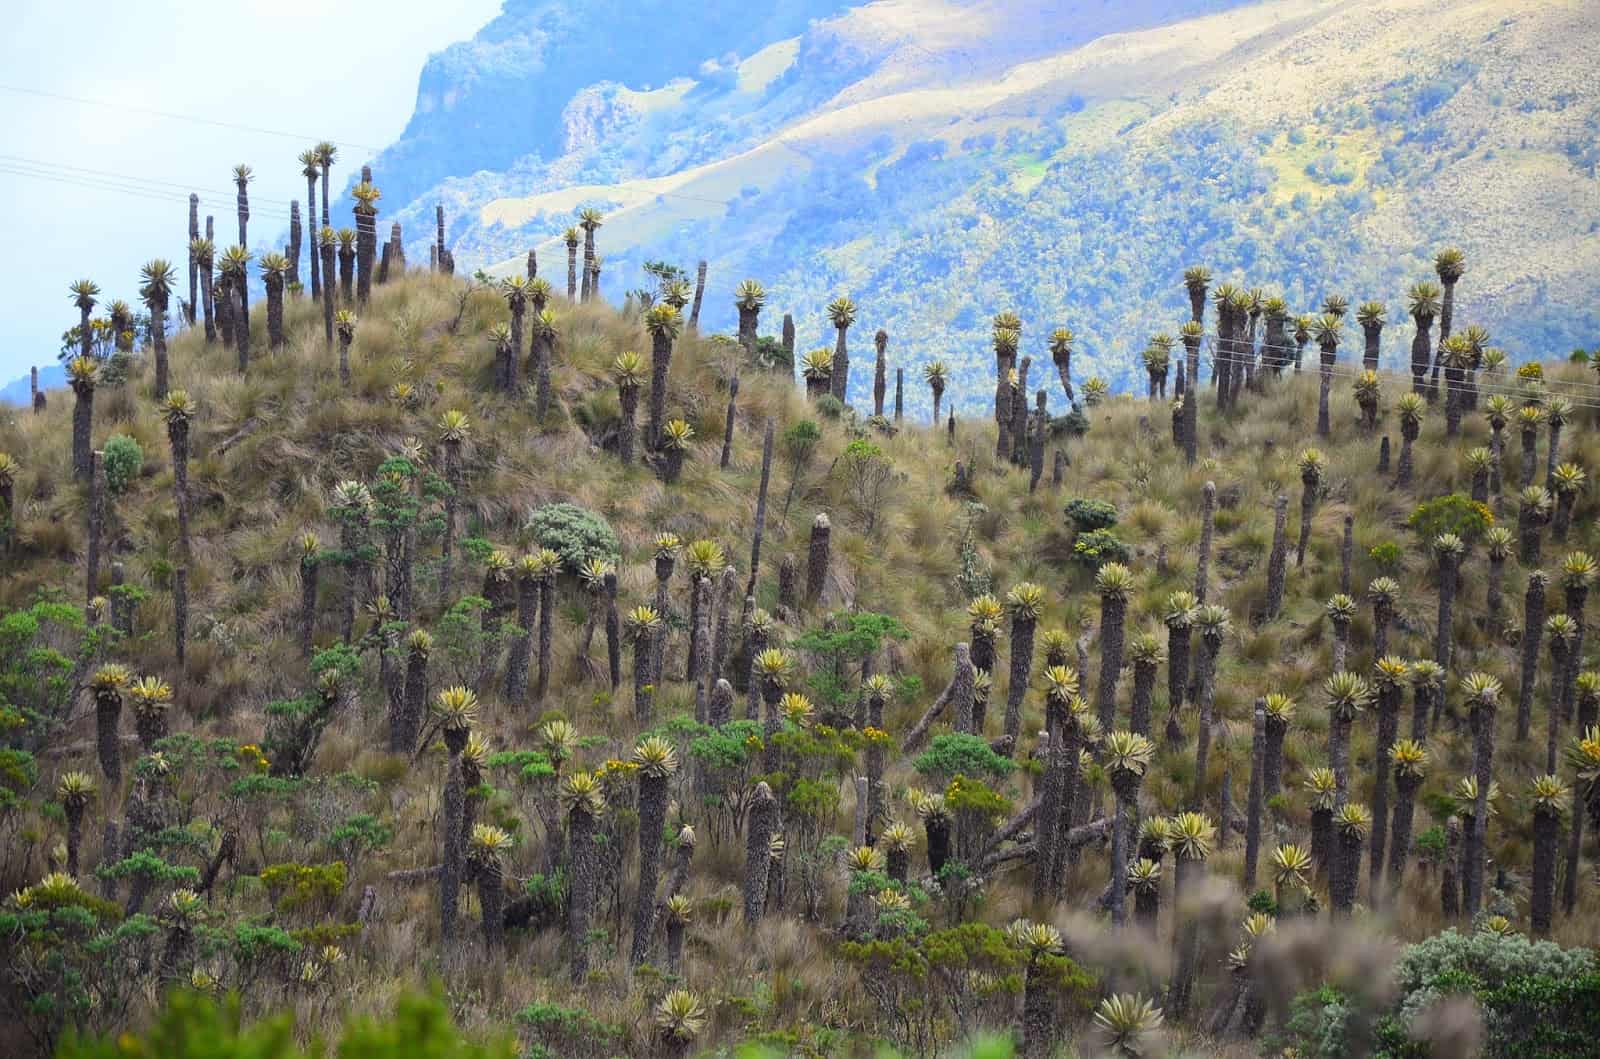 Frailejones at Los Nevados National Park in Colombia